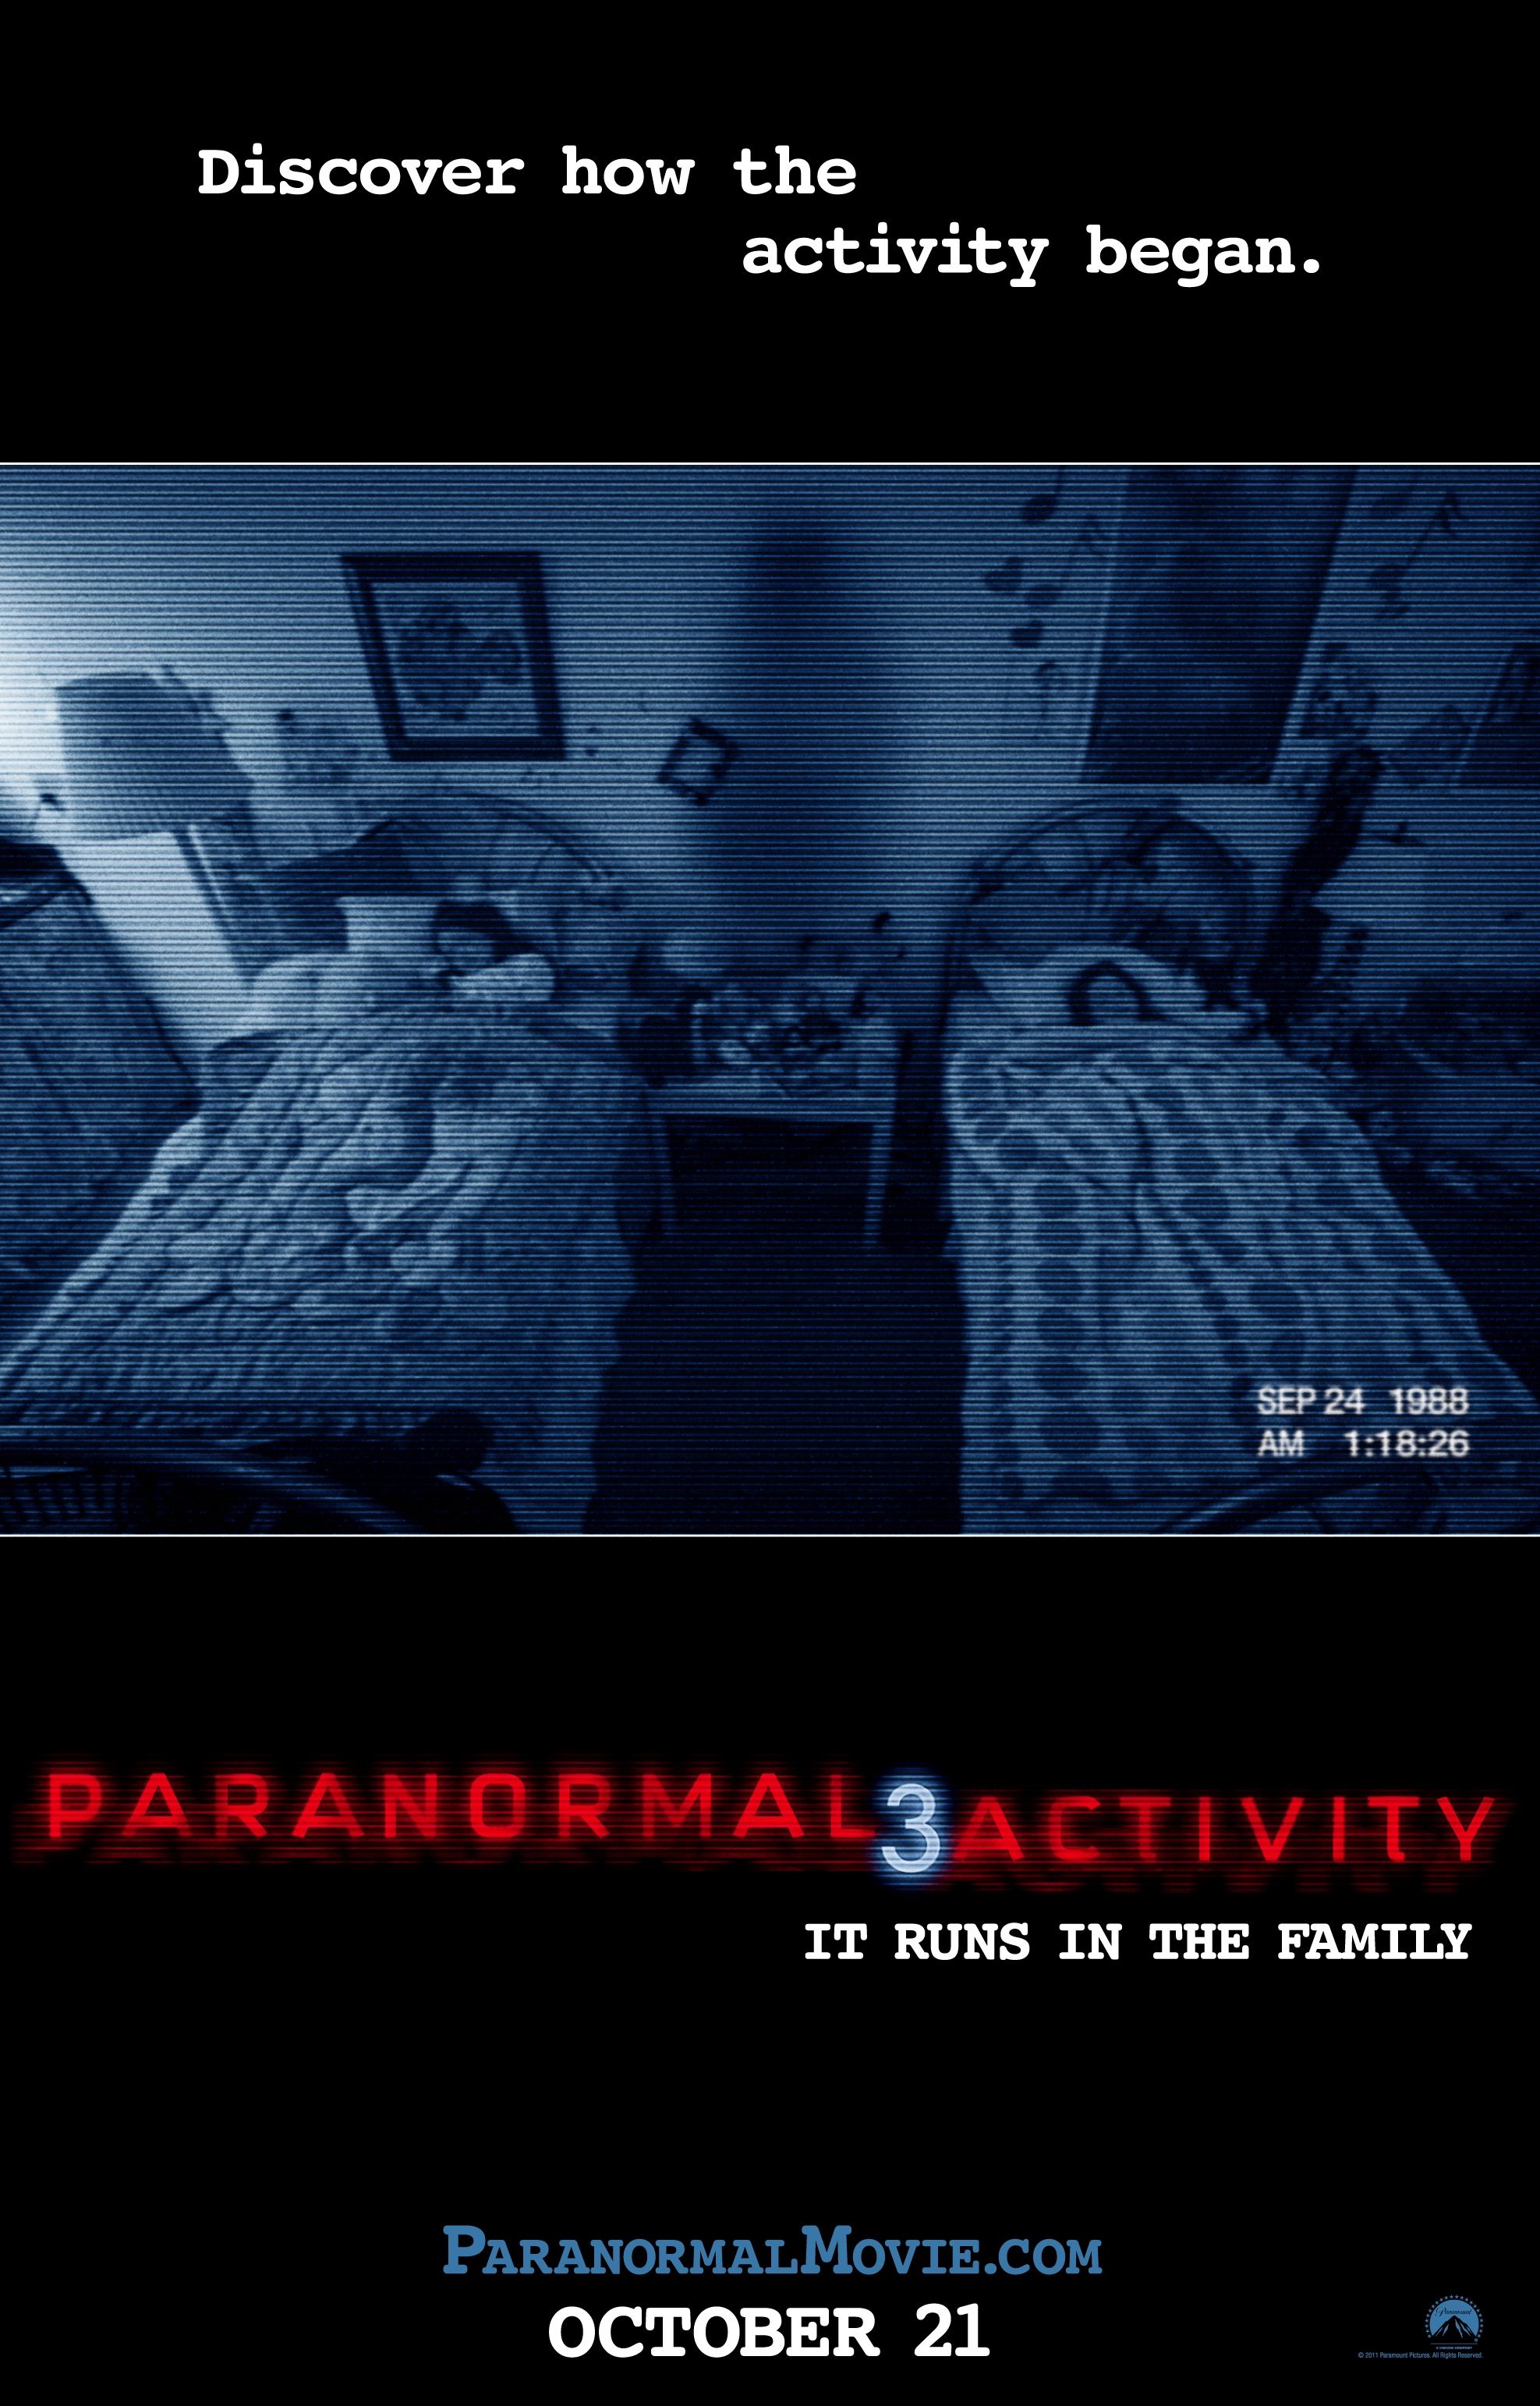 paranormal 3 trailer